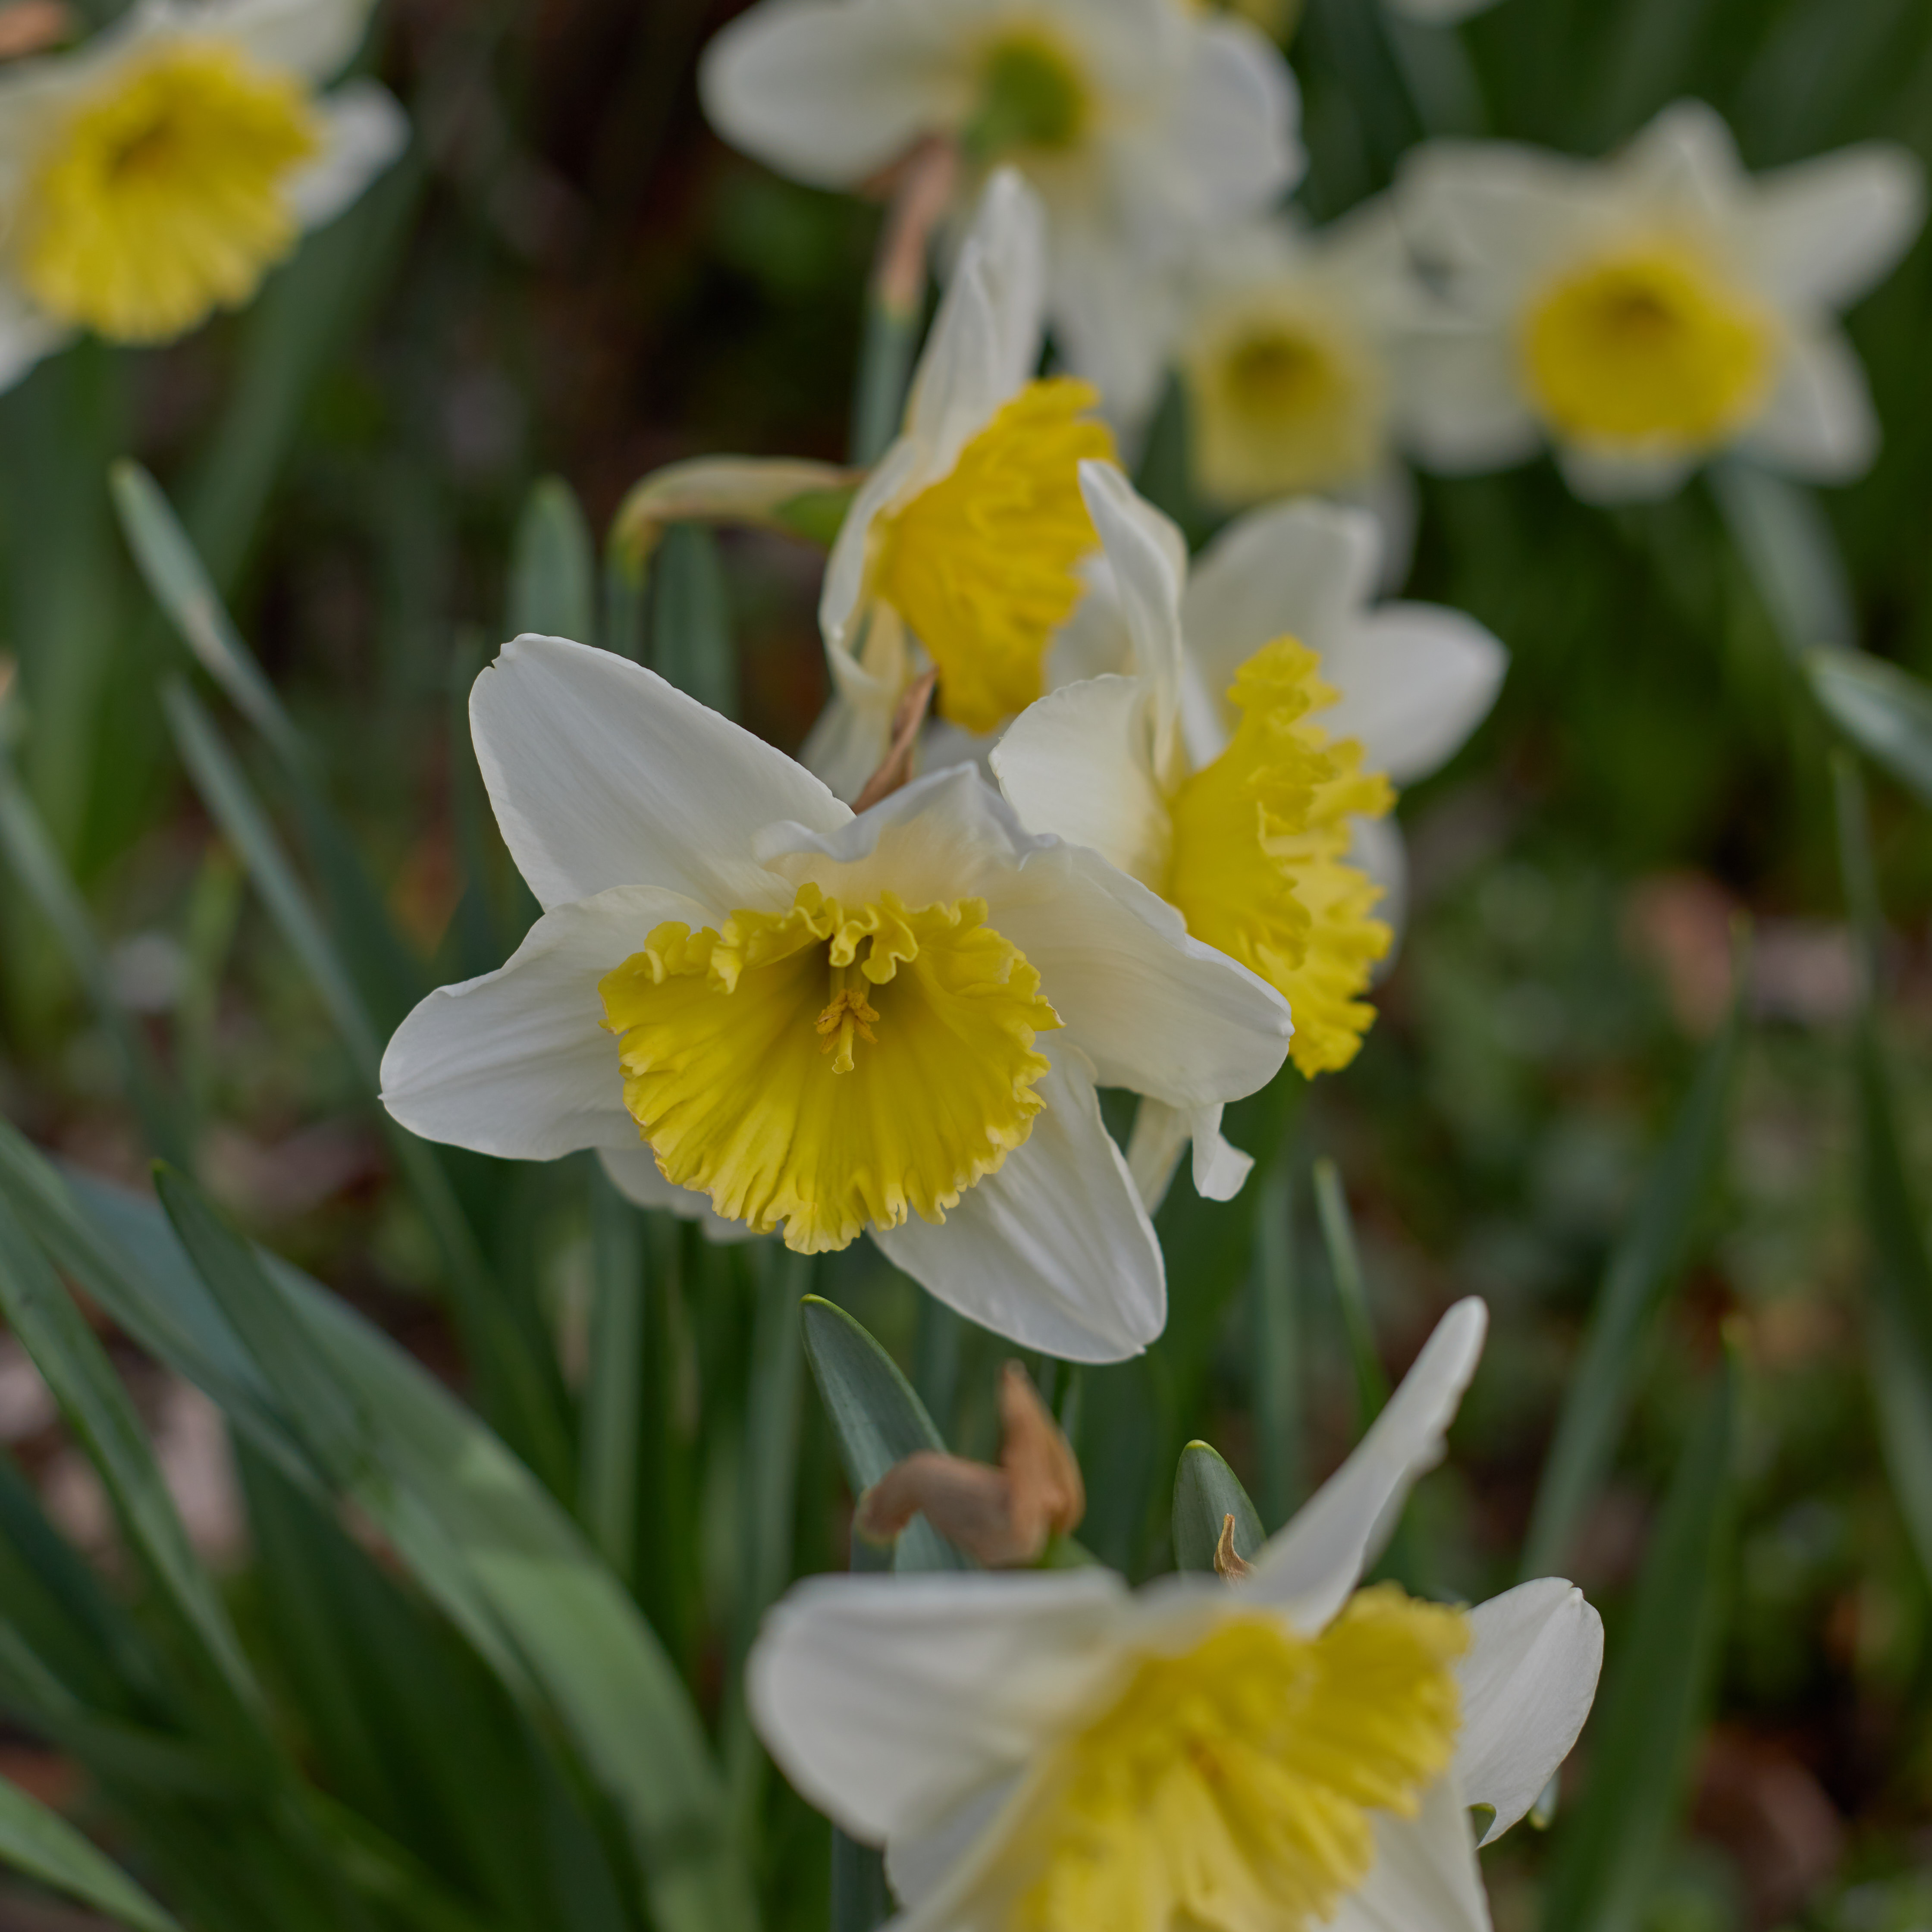 Daffodils in garden.